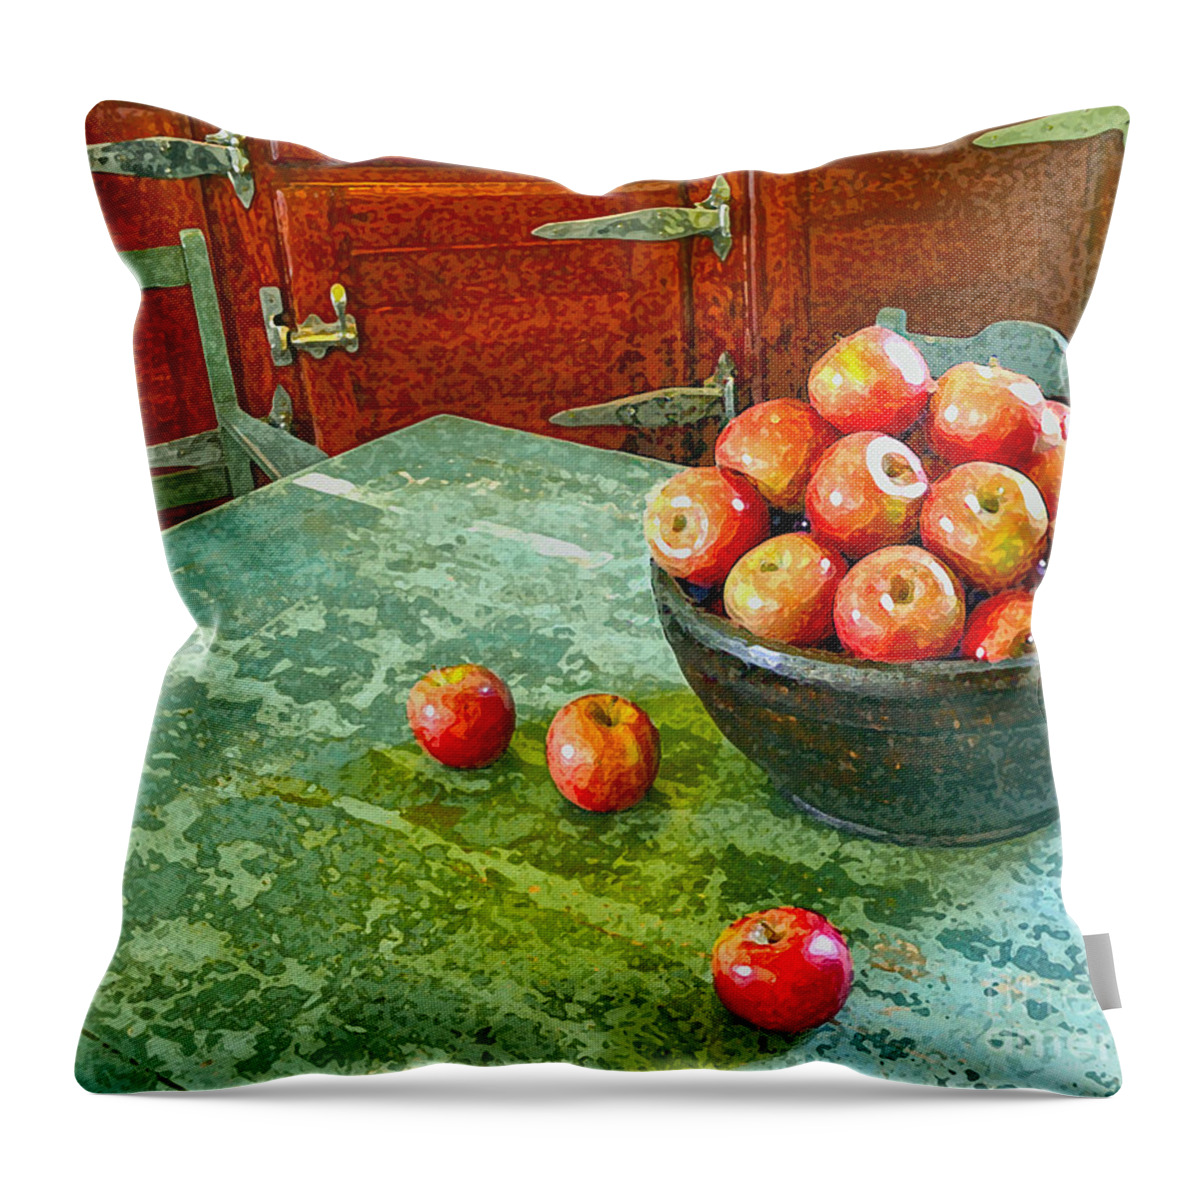 Apples Throw Pillow featuring the digital art Apples by Karen Francis